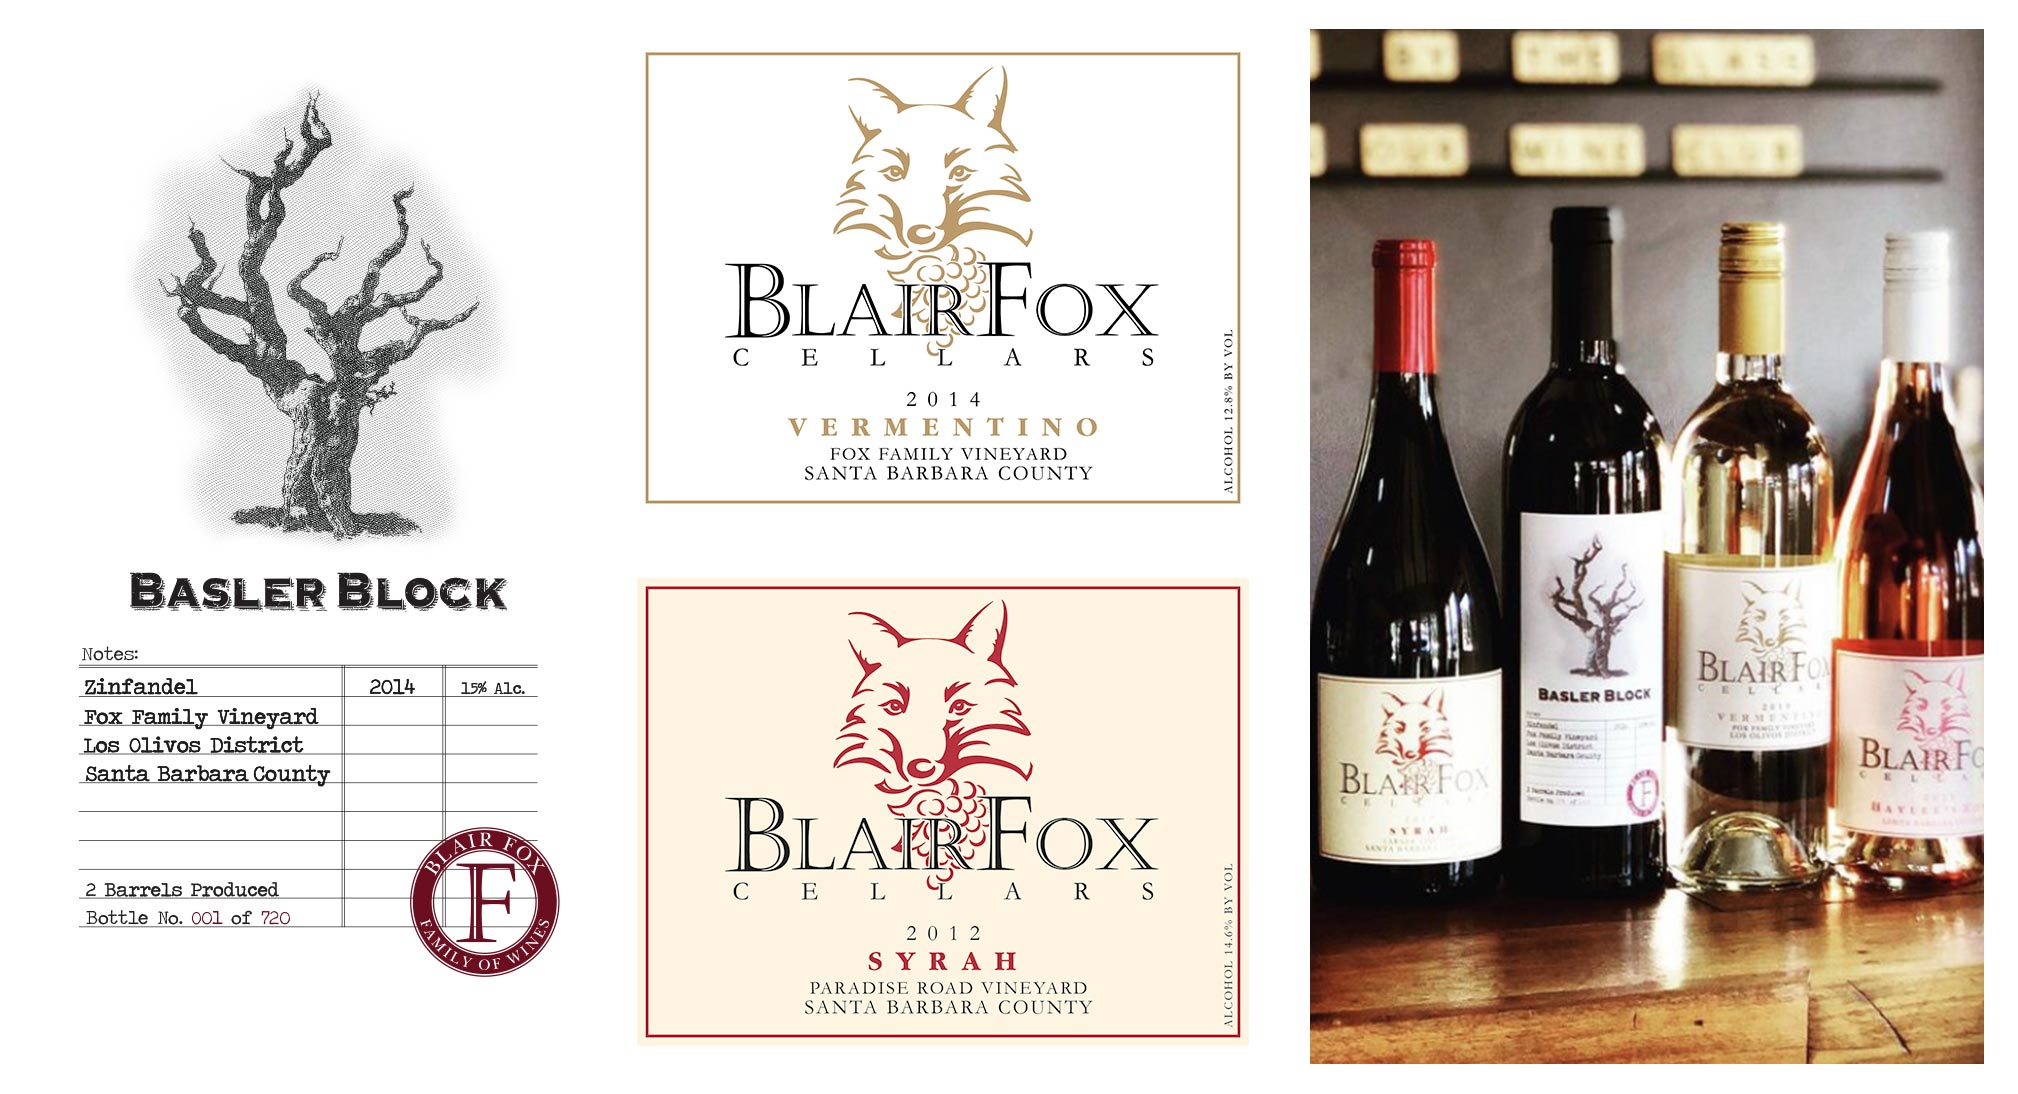 Blair Fox Cellars wine label designs varietals